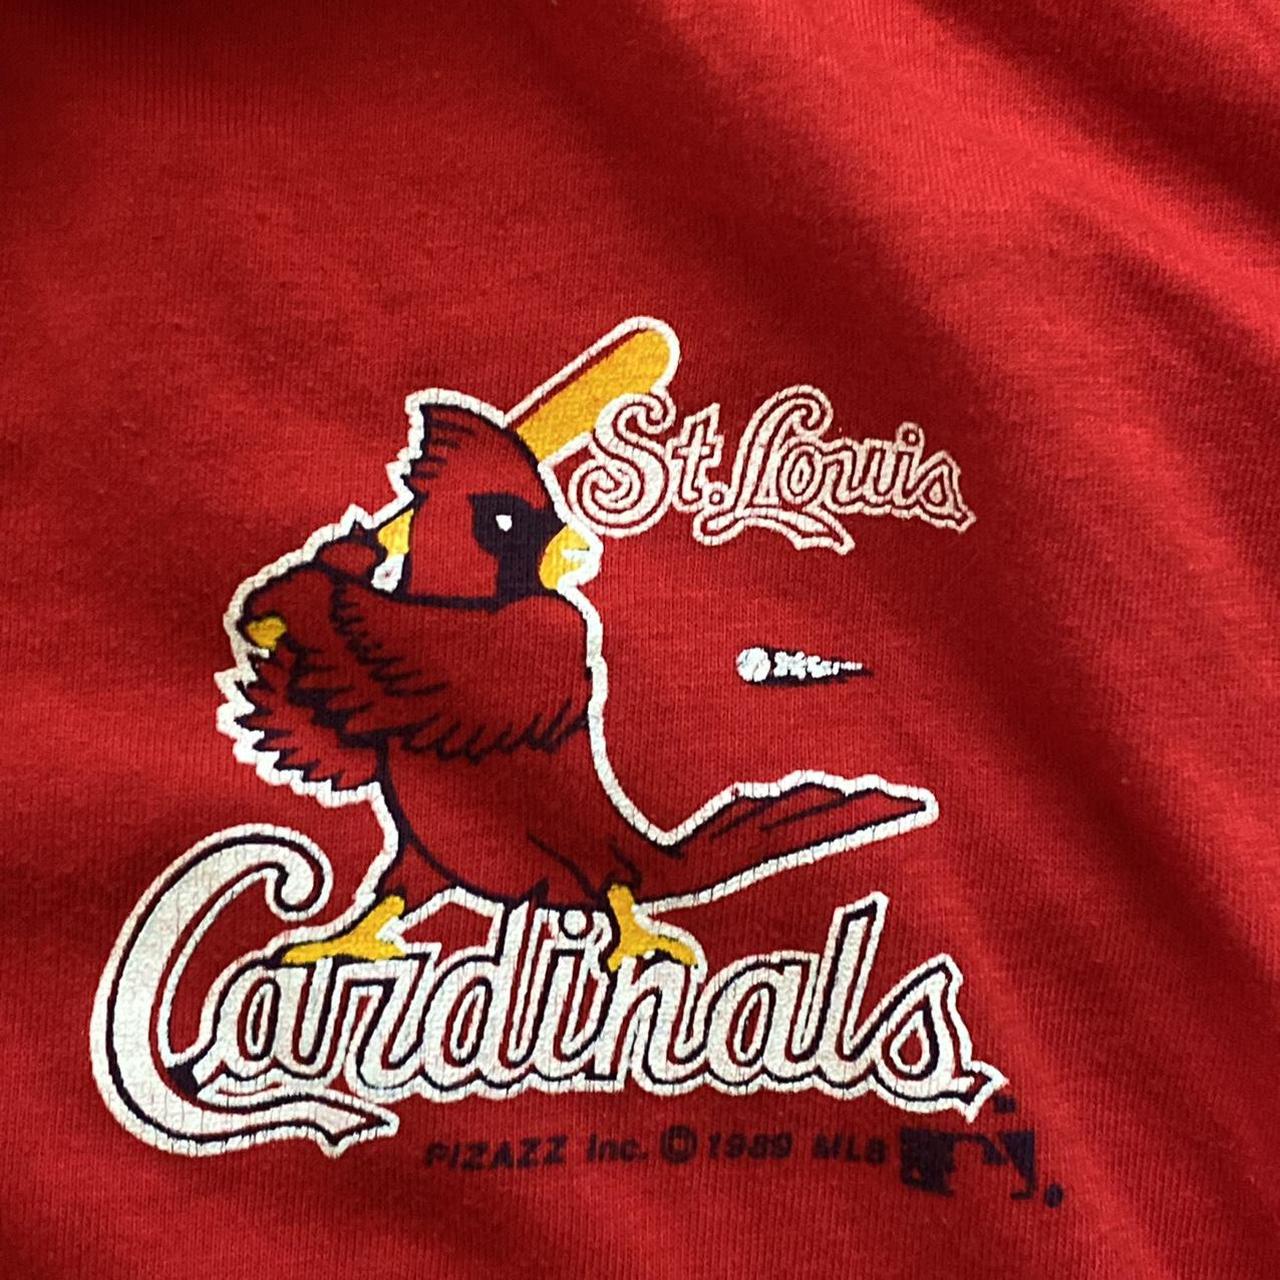 Men's Red St. Louis Cardinals Team Logo Polo